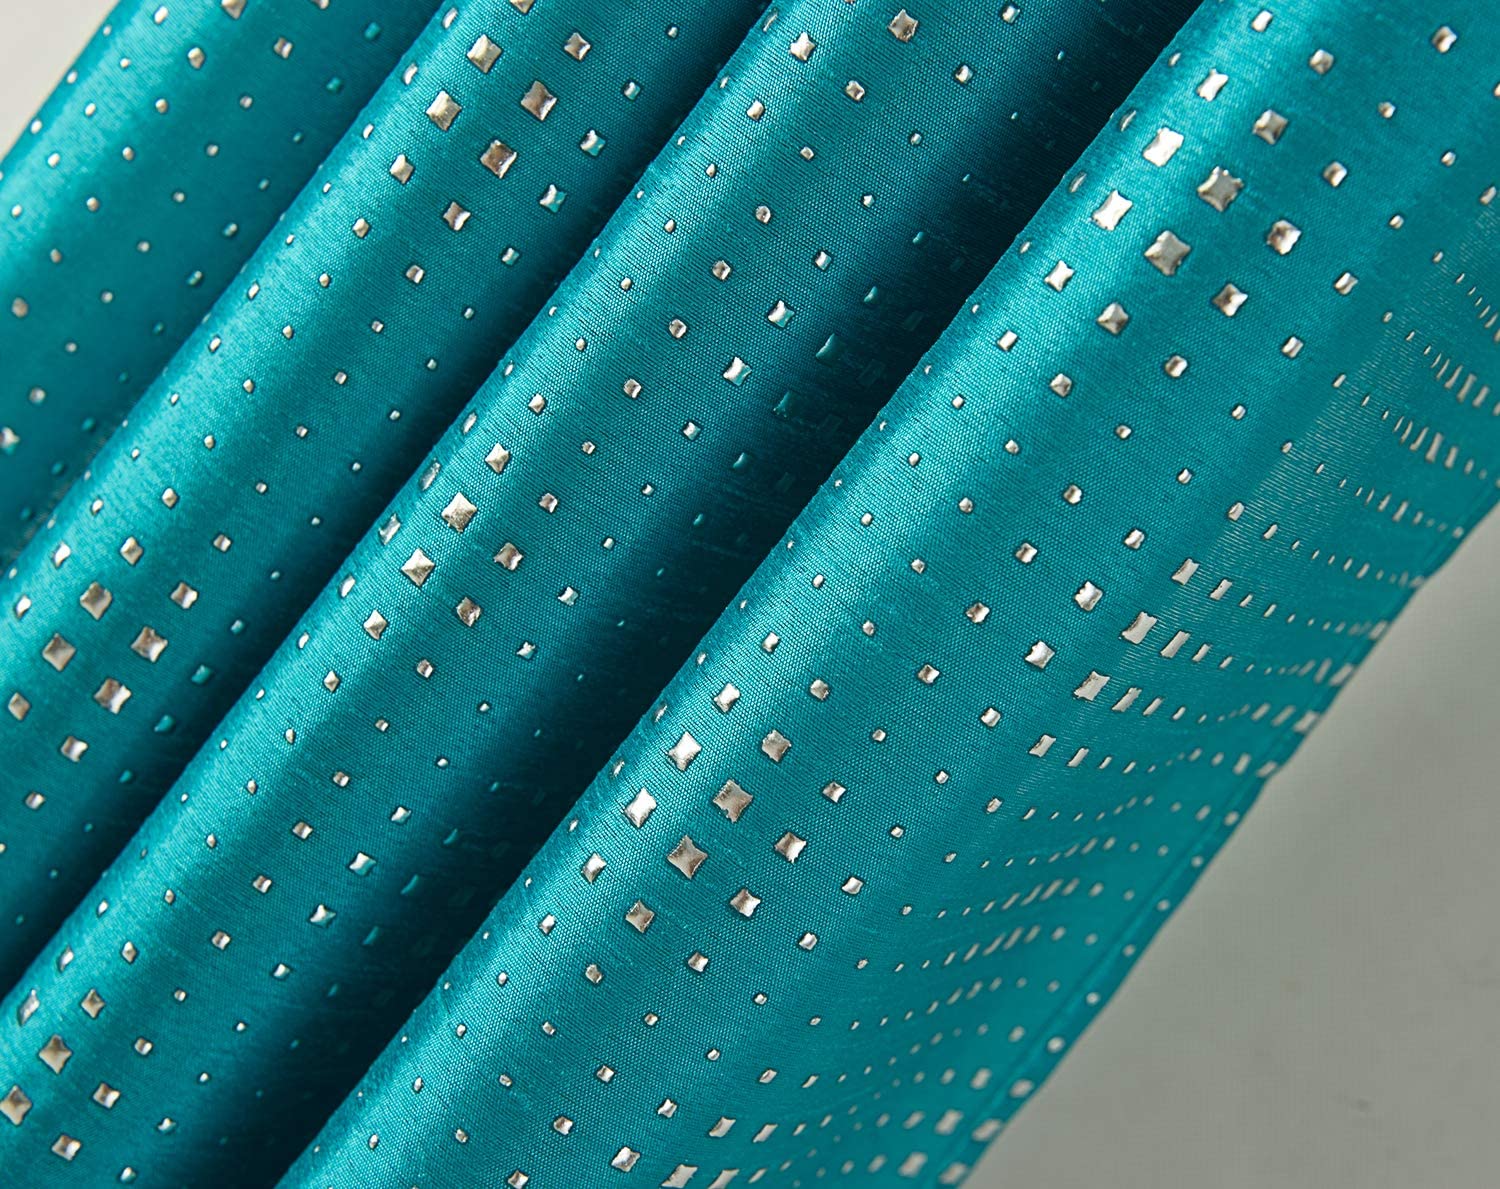 Carolina Metallic Geometric Faux Silk 54 x 90 in. Grommet Single Curtain Panel - Linen Universe Co.